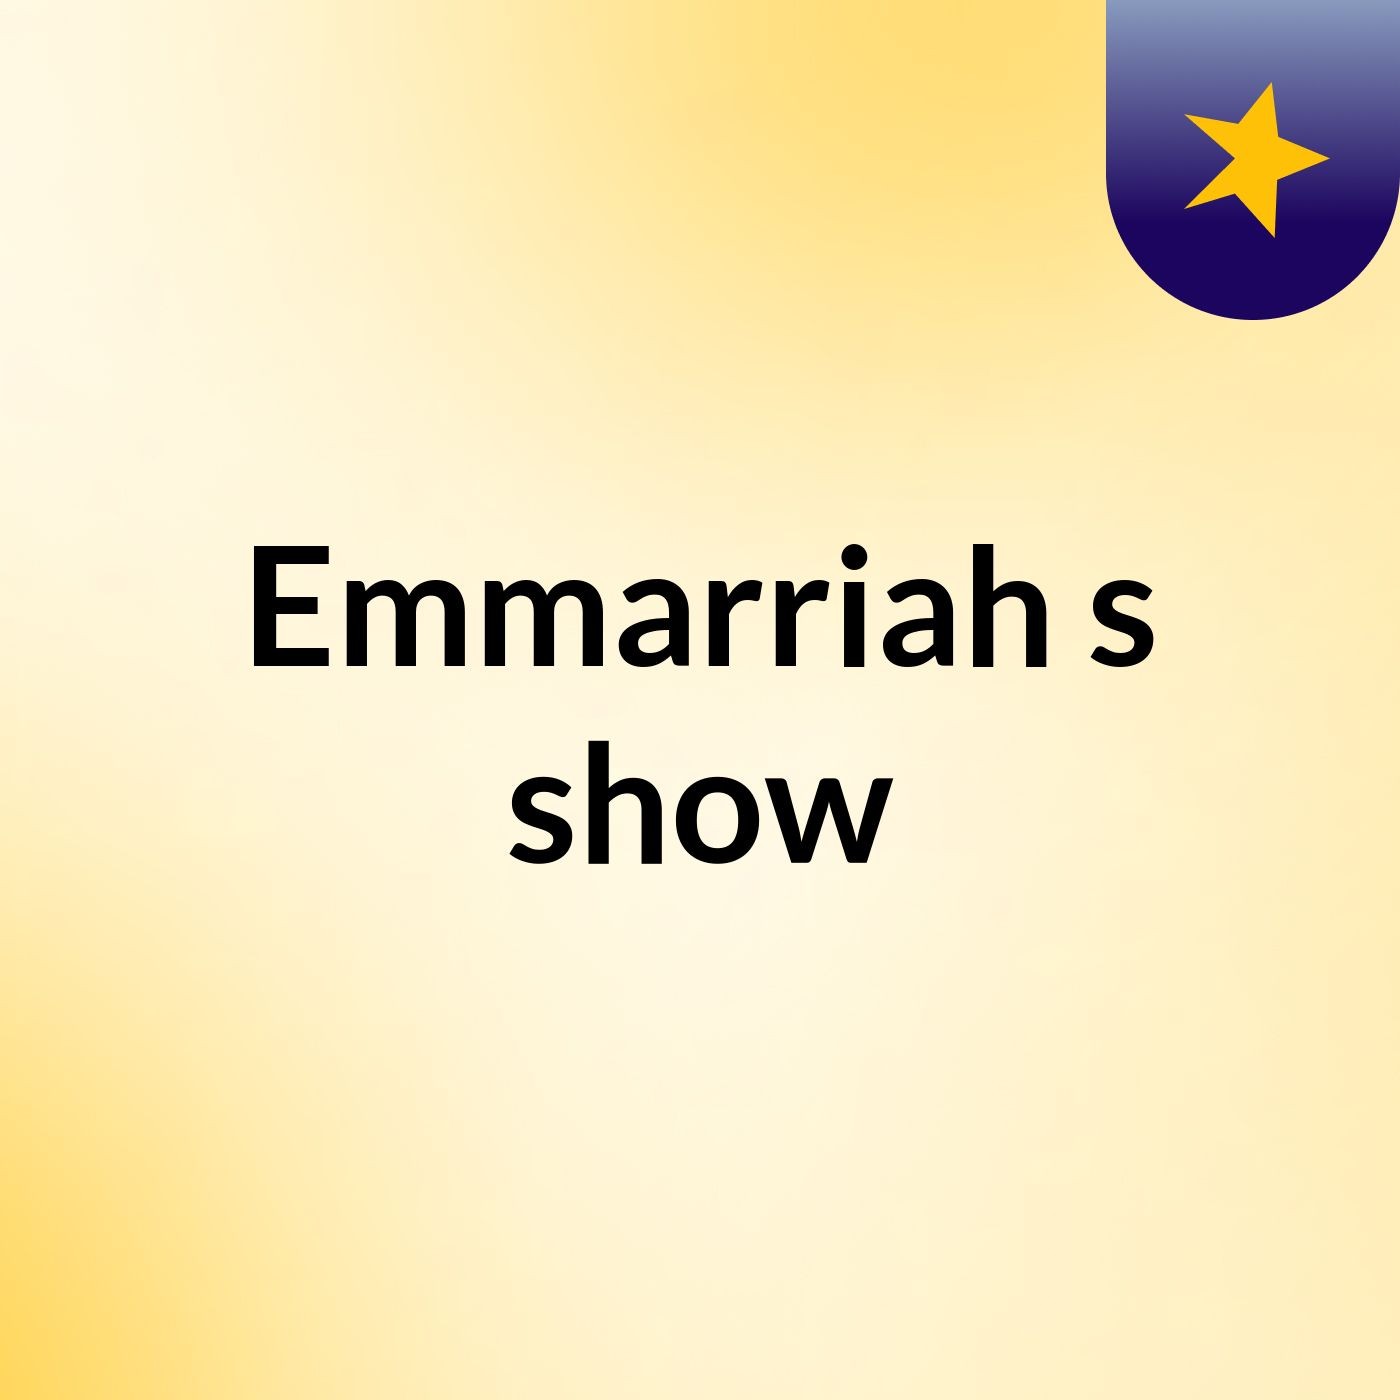 Emmarriah's show